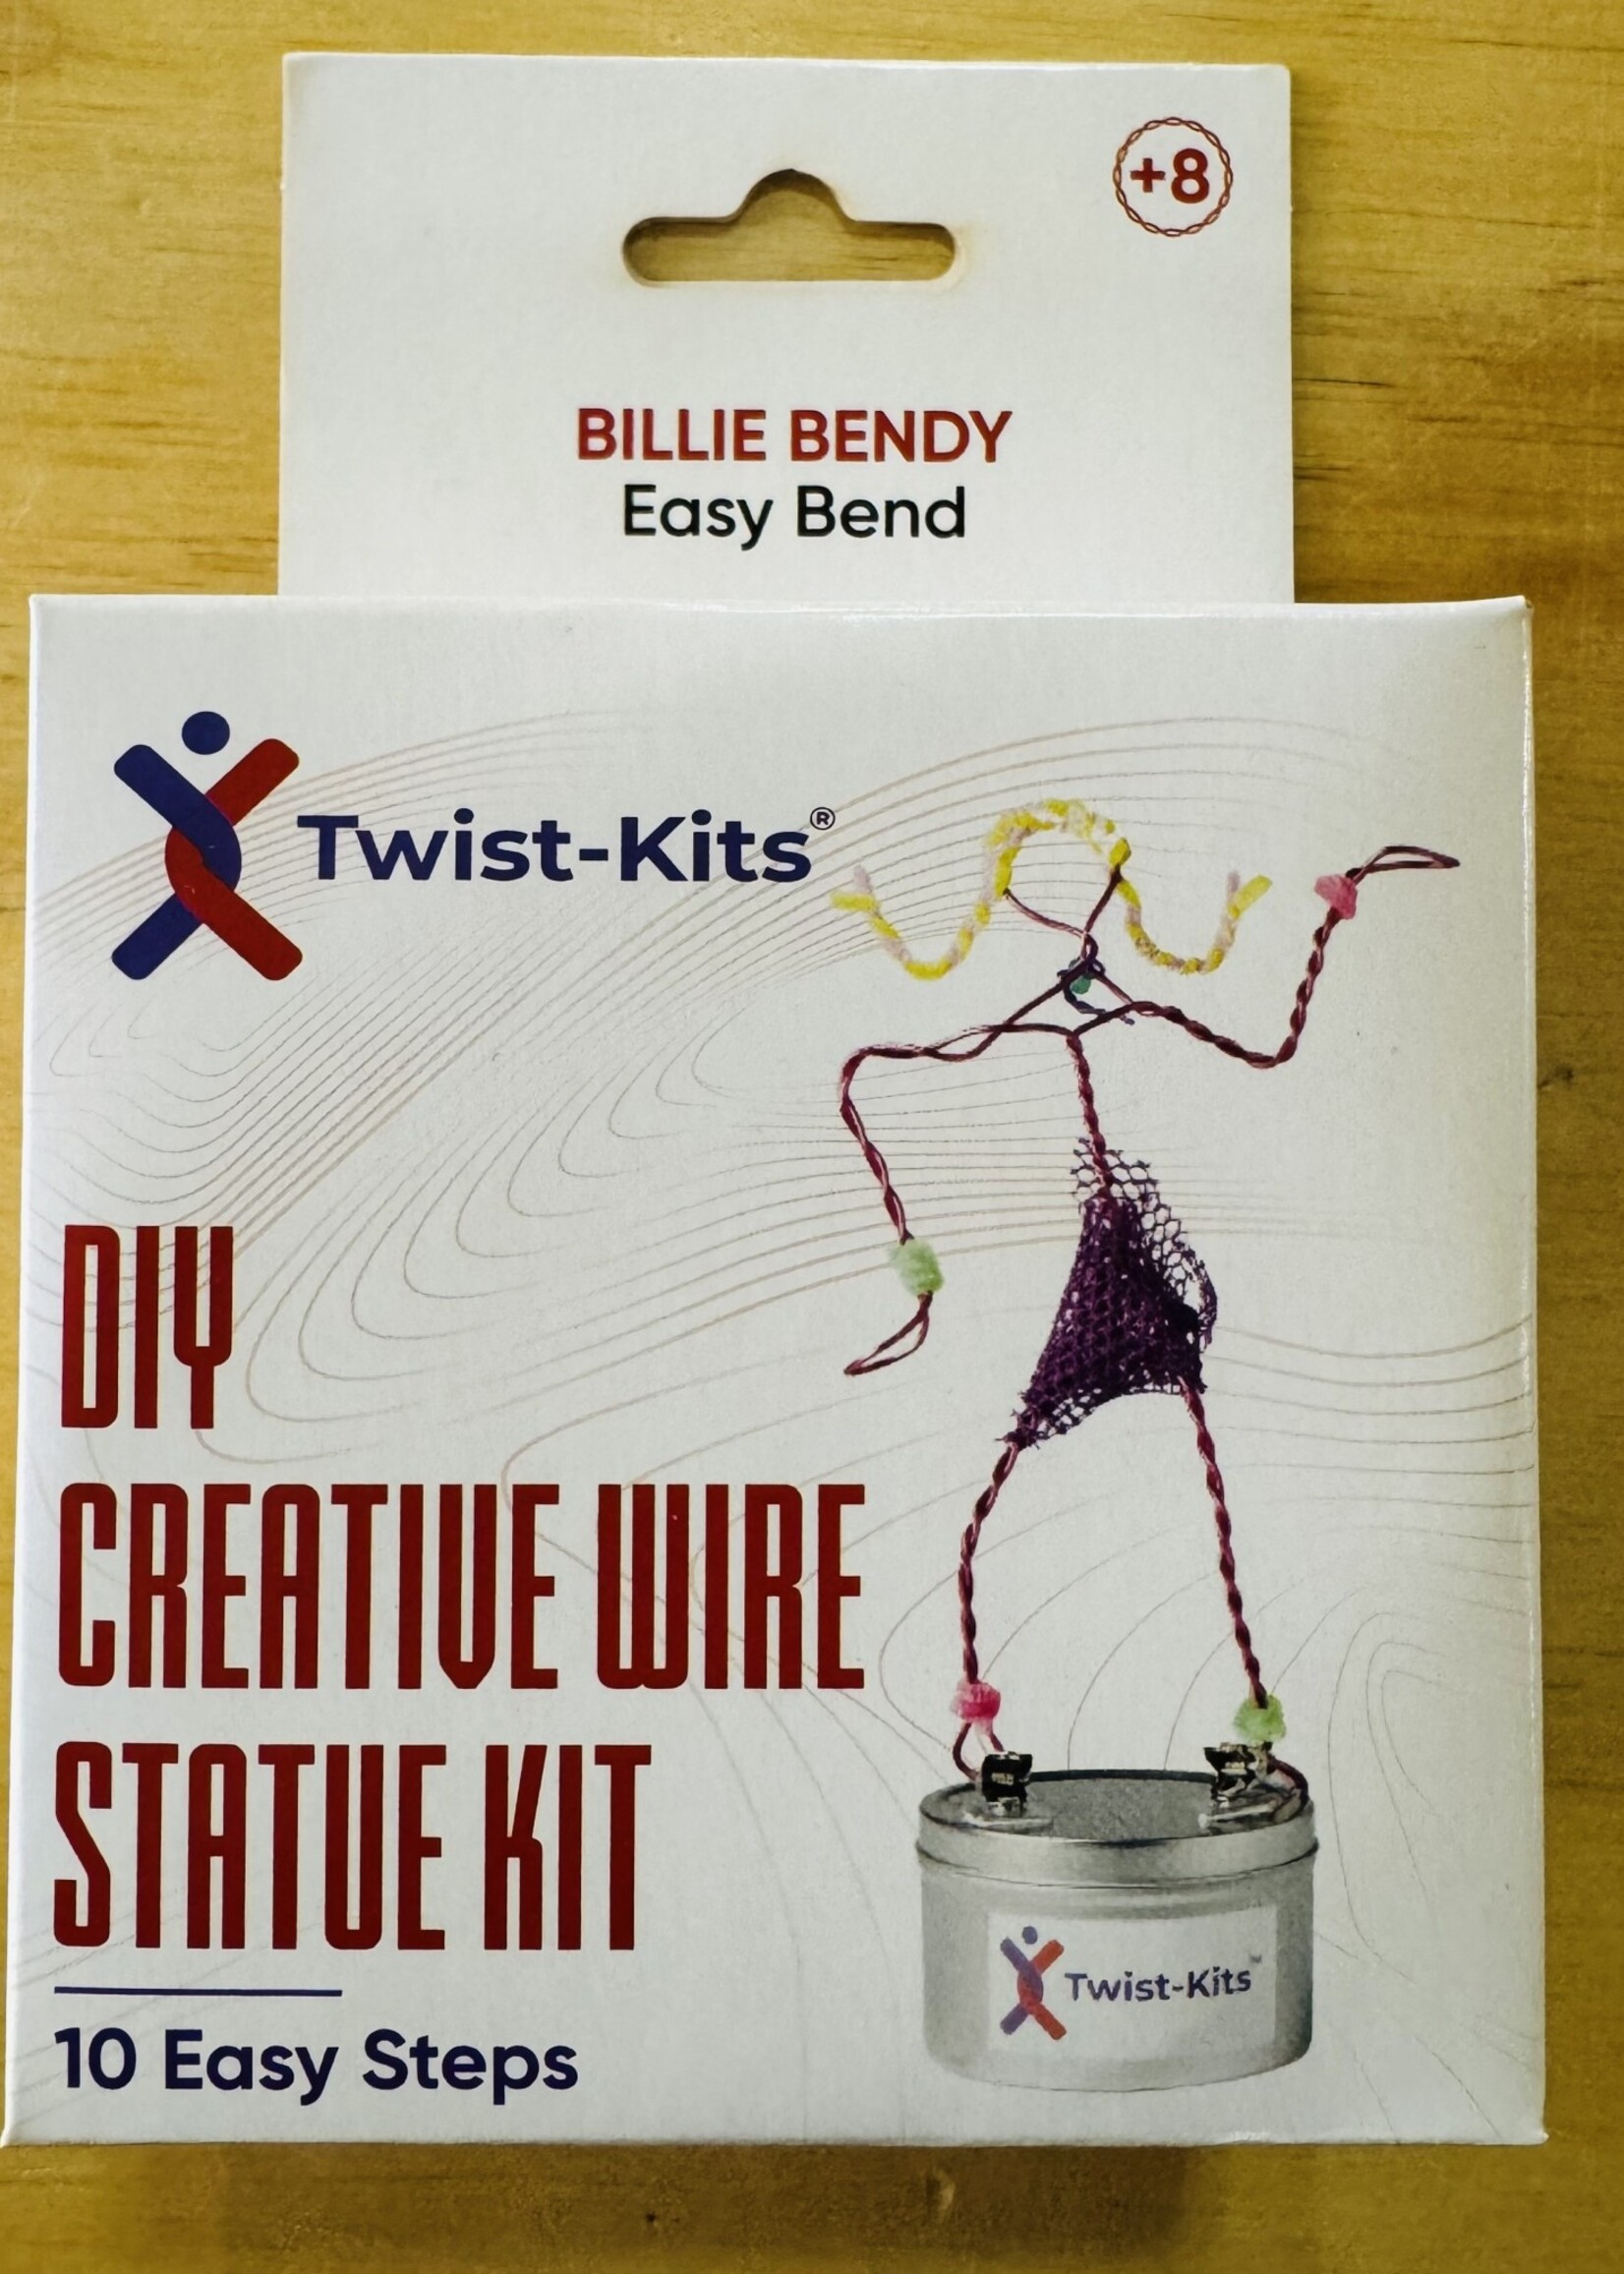 Billie Bendy - Wire Statue Kit- Easy